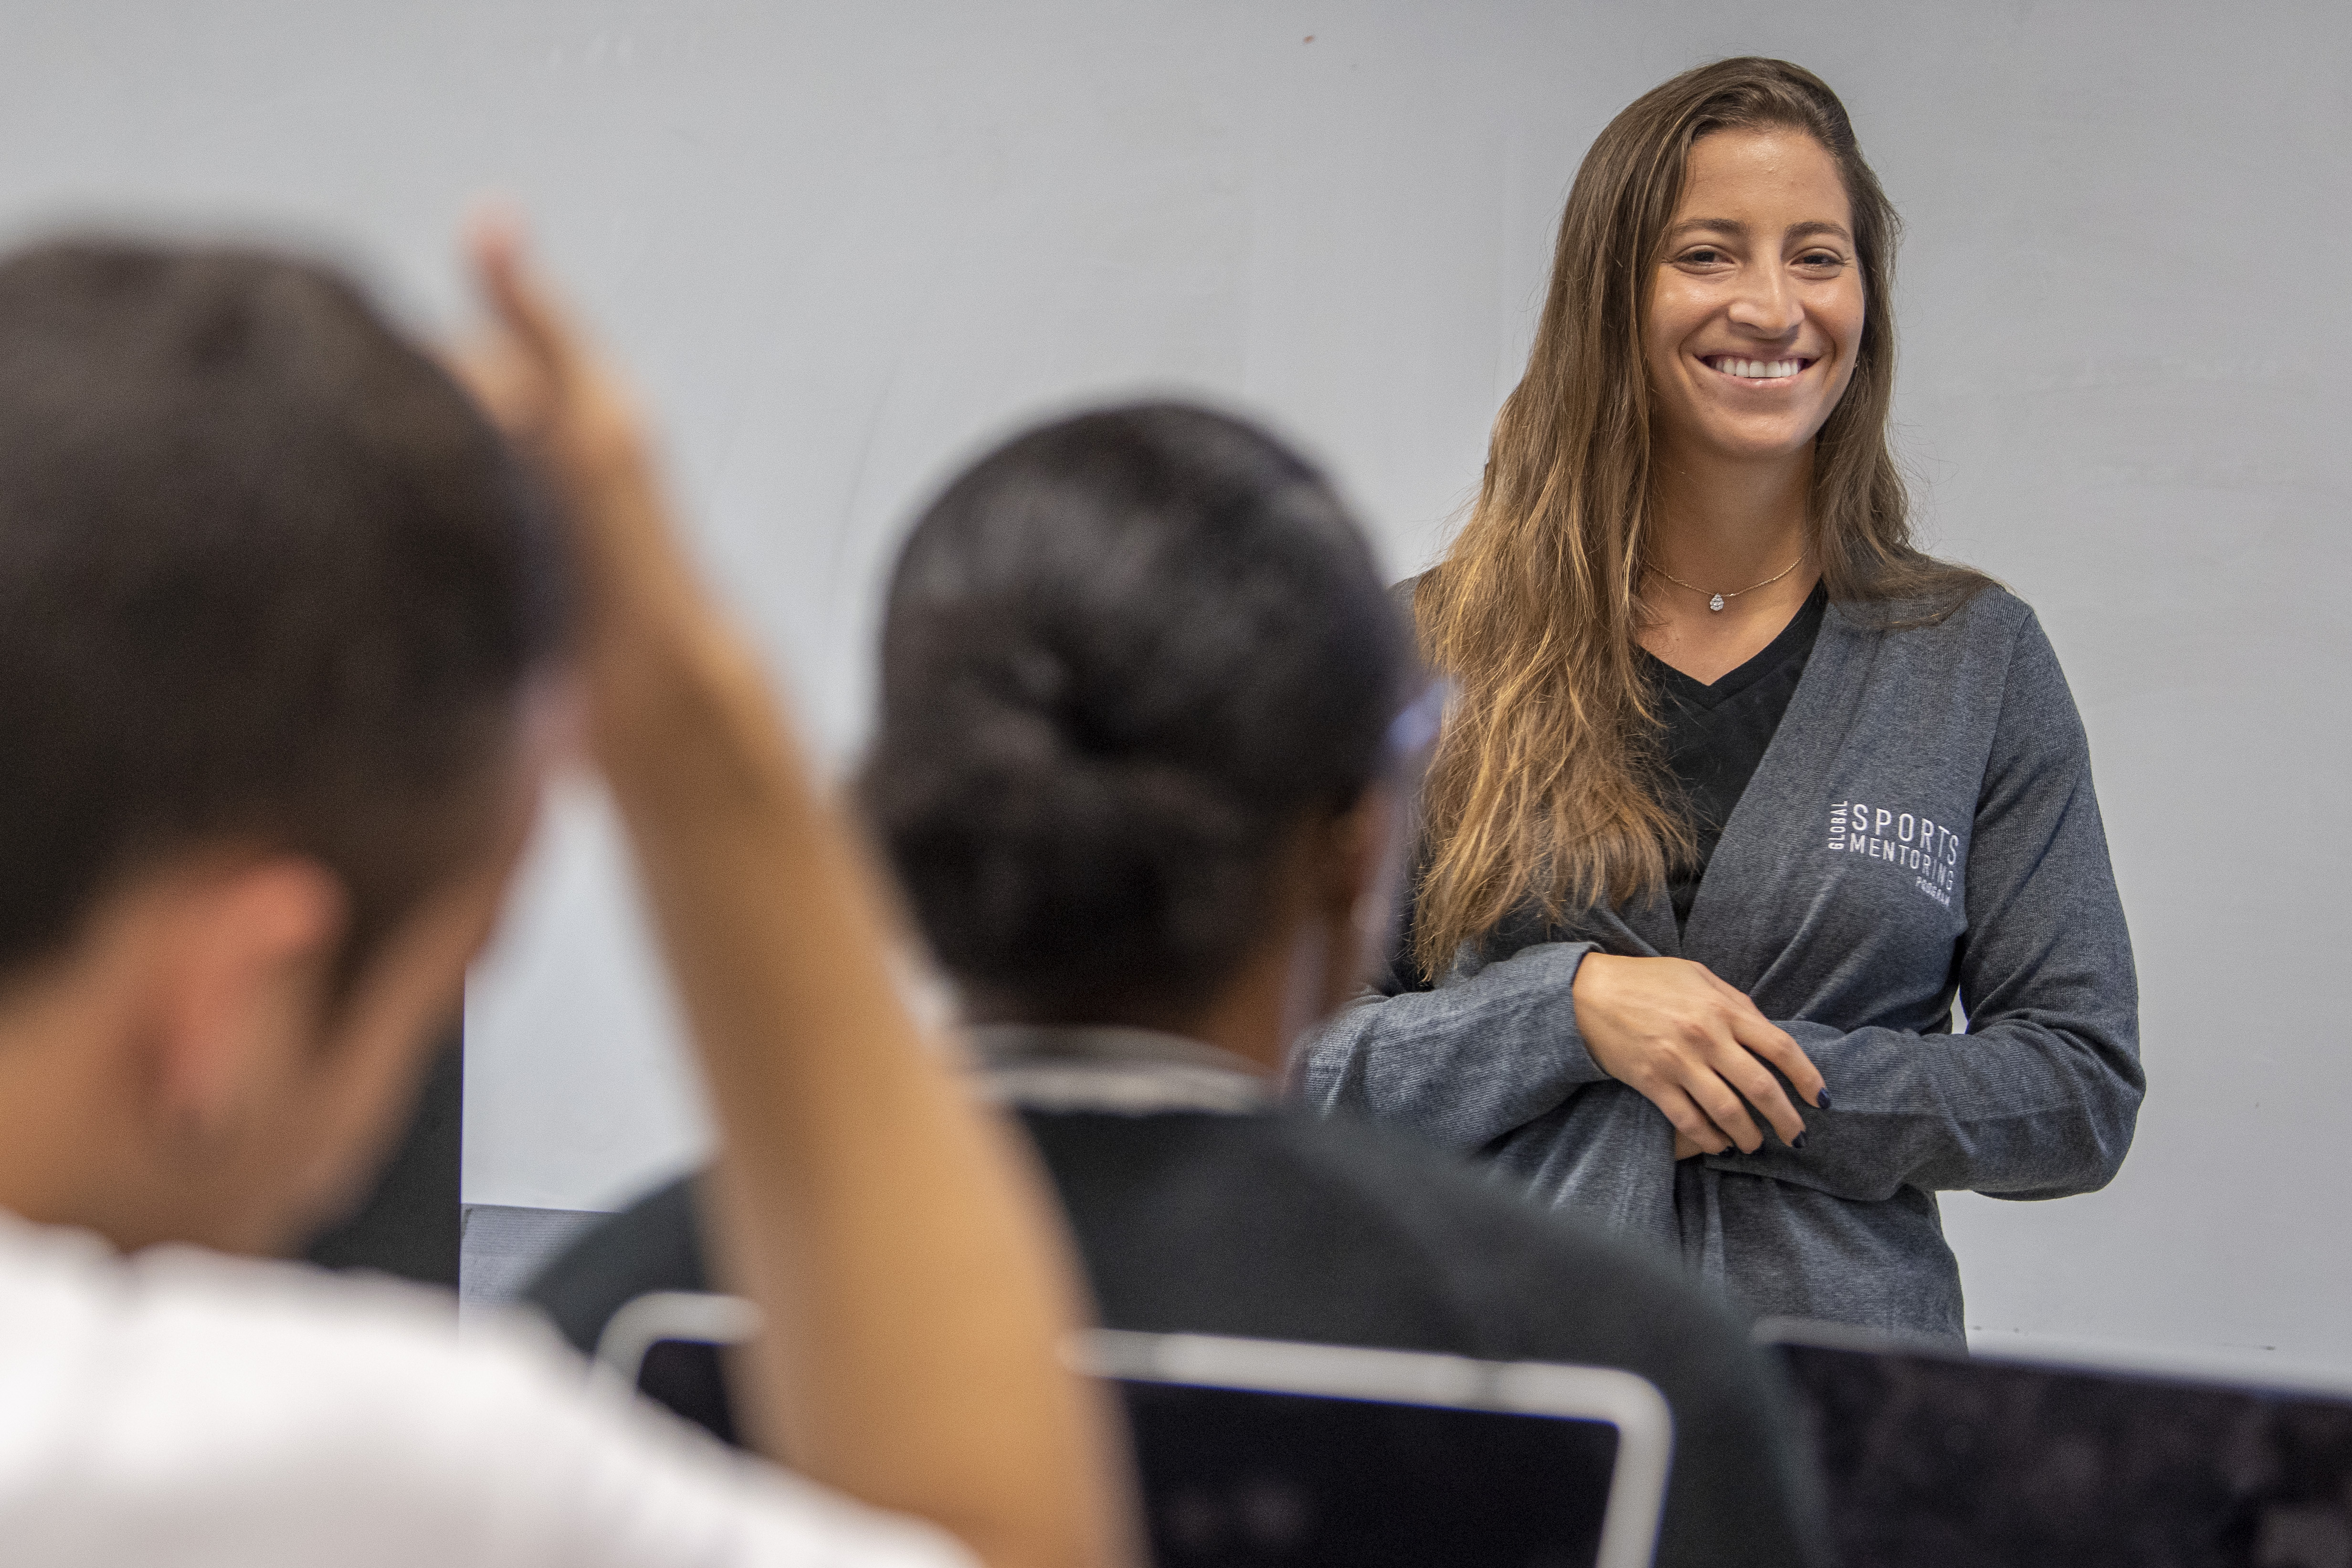 Karen Chammas from Lebanon is visiting UConn's Sport Management faculty as part of a Global Mentorship Program. (Sean Flynn/UConn Photo)